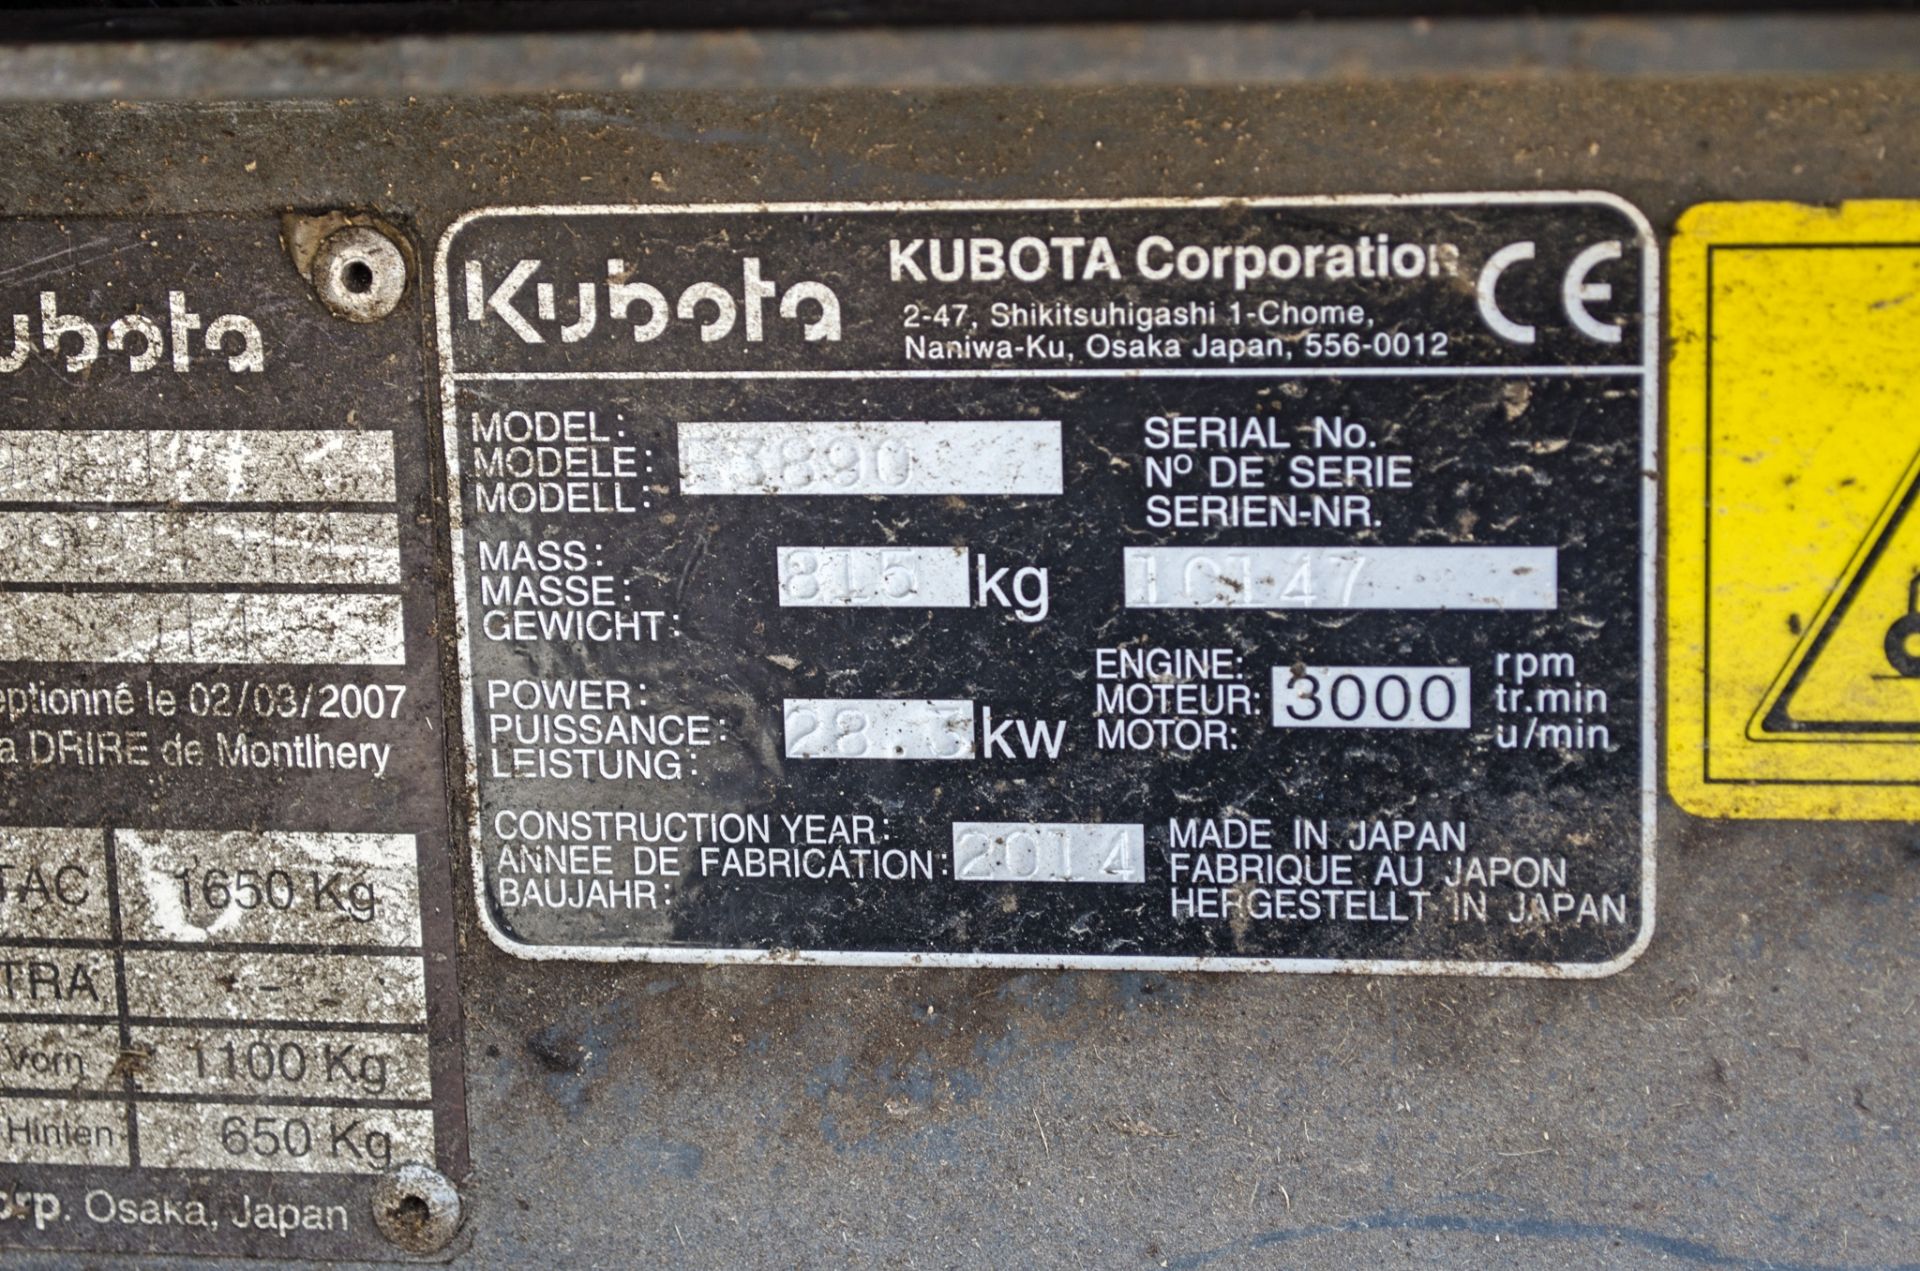 Kubota 3890 diesel driven ride on lawnmower Year: 2014 S/N: 10147 Recorded Hours: 3642 - Image 15 of 15